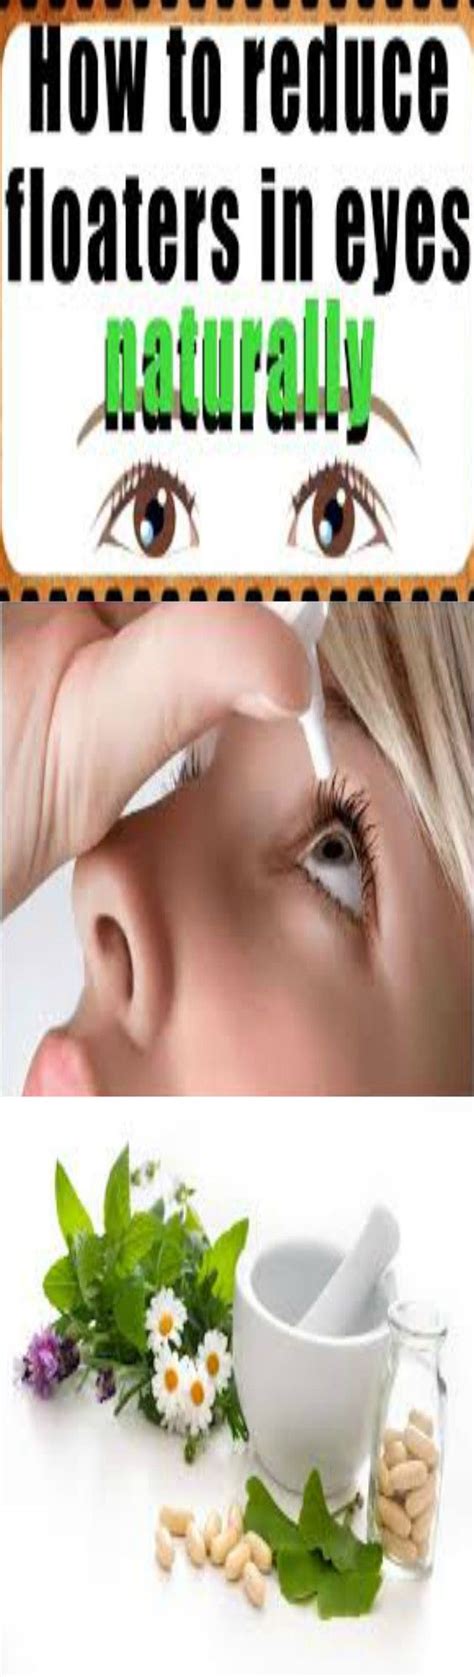 Top 15 Home Remedies For Eye Floaters Holistic Health Remedies Eye